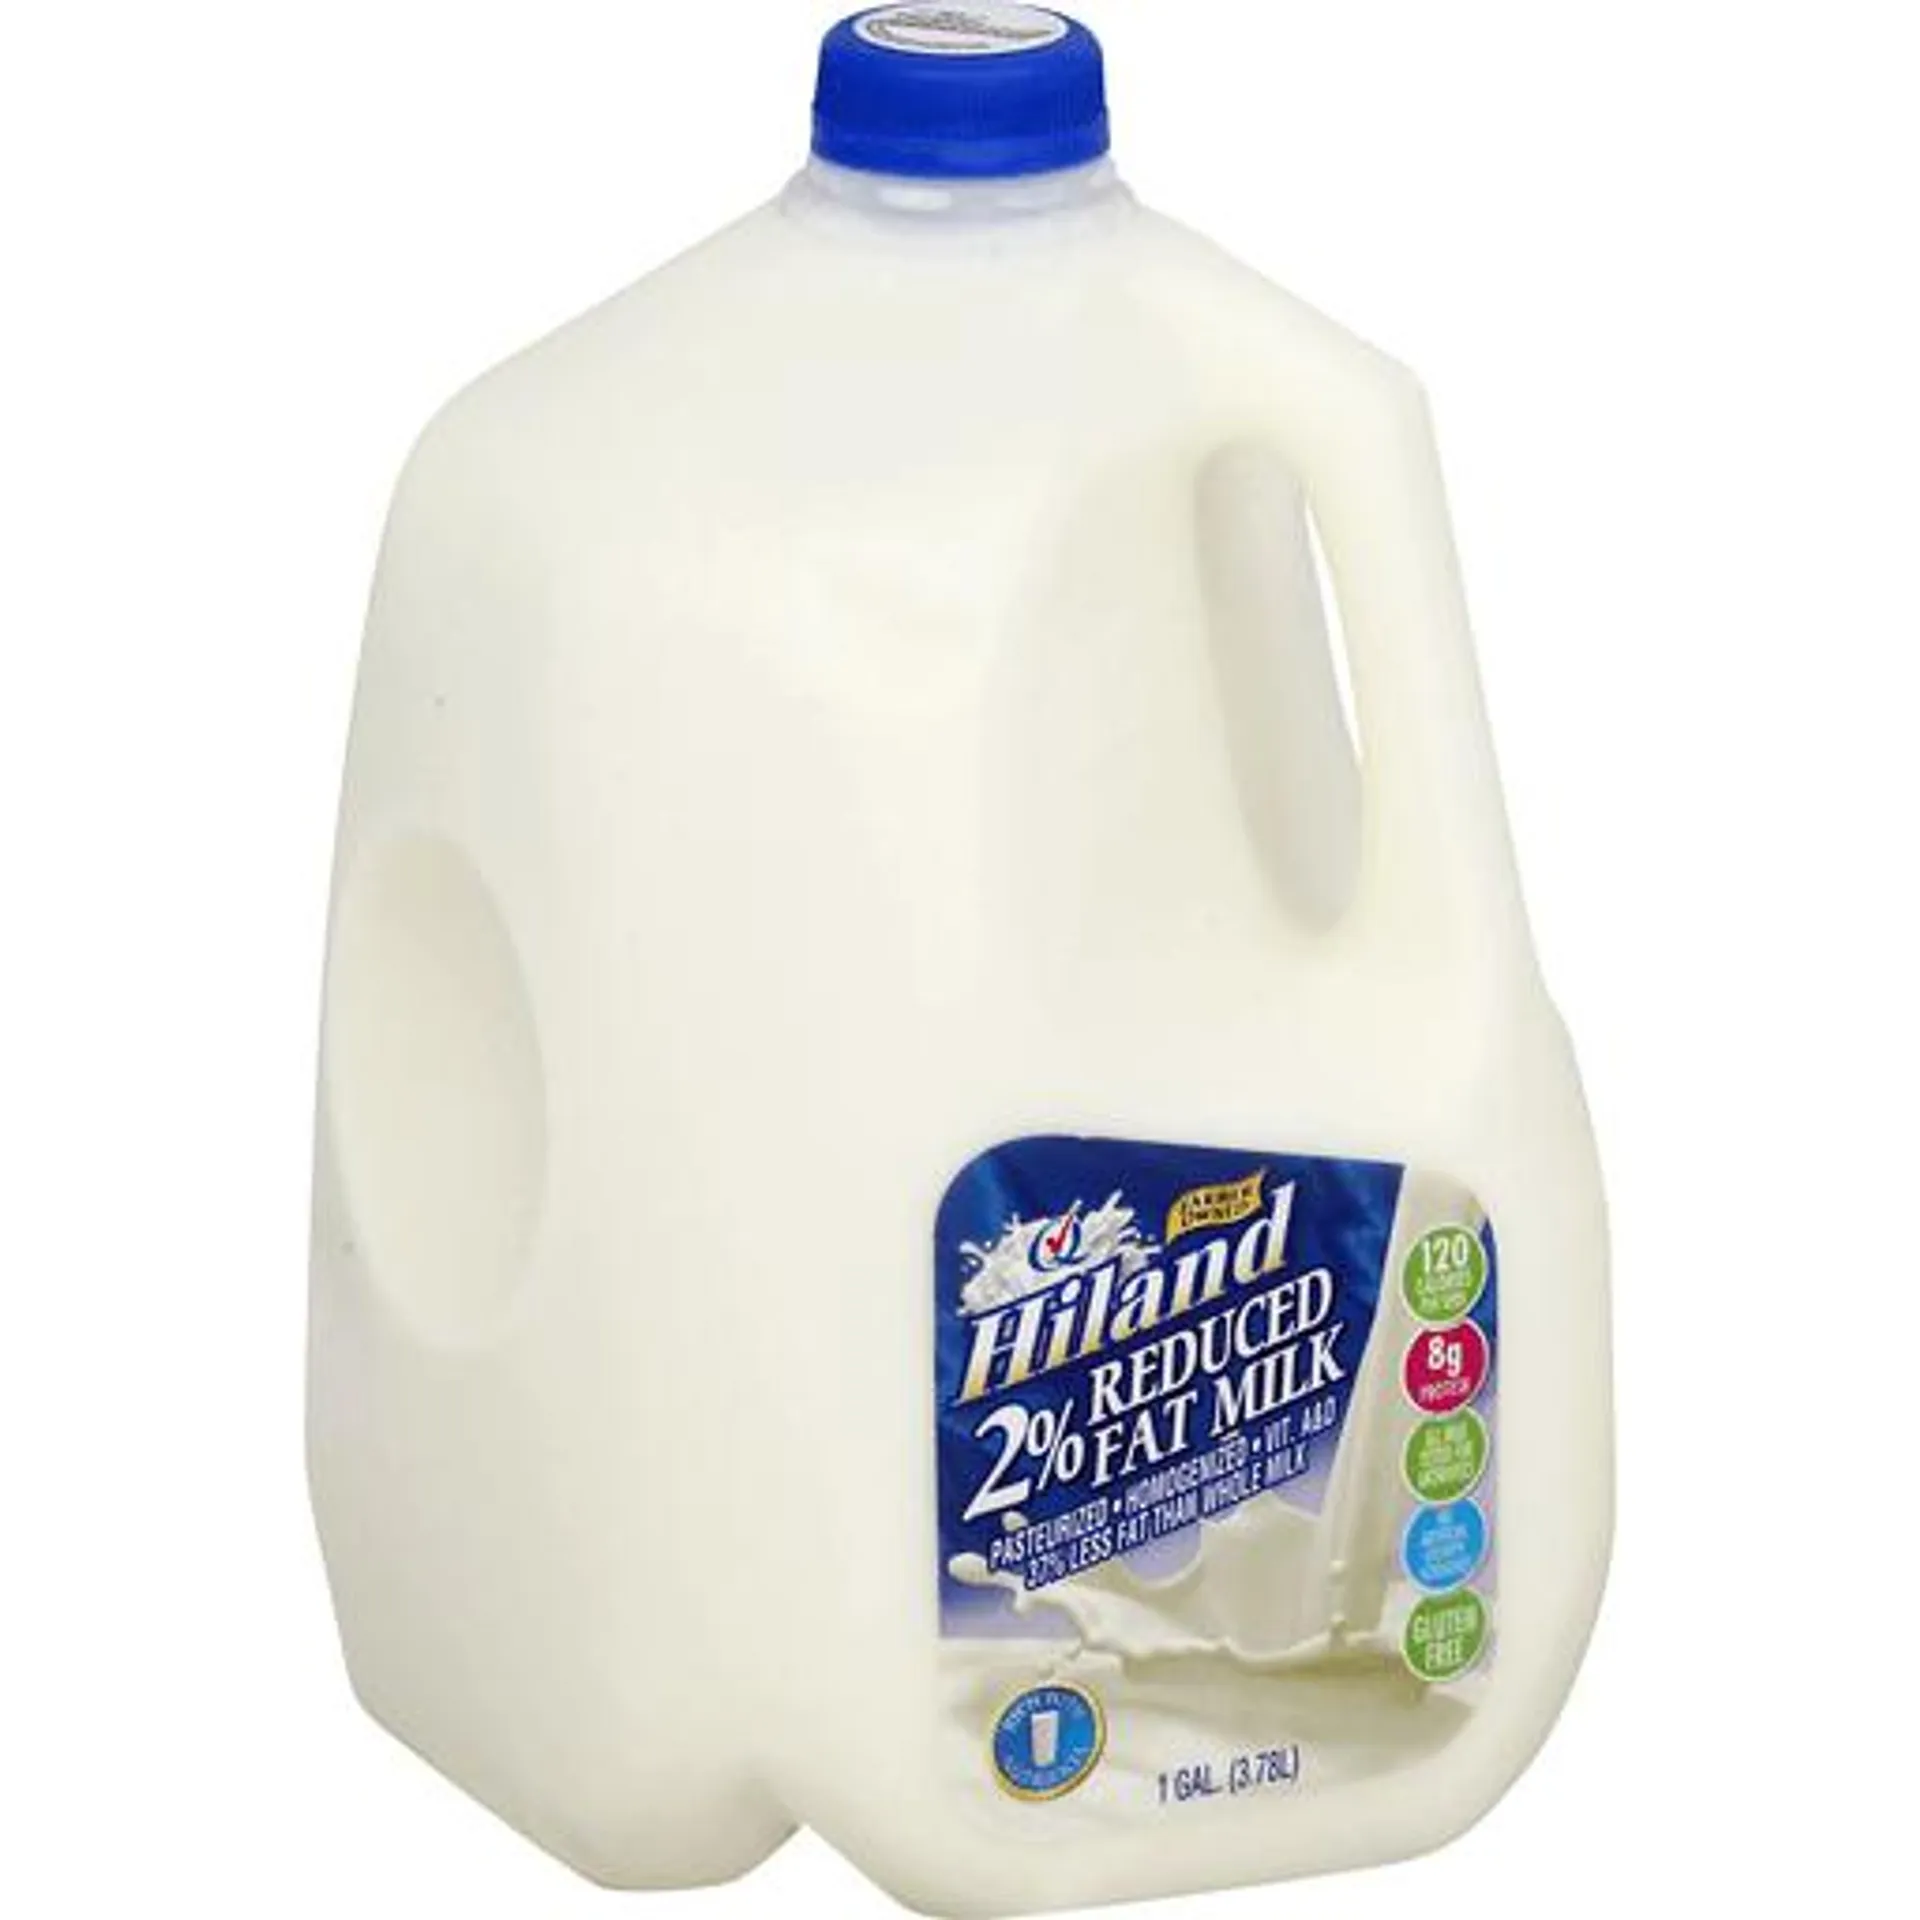 Hiland 2% Reduced Fat Milk, 1 gallon